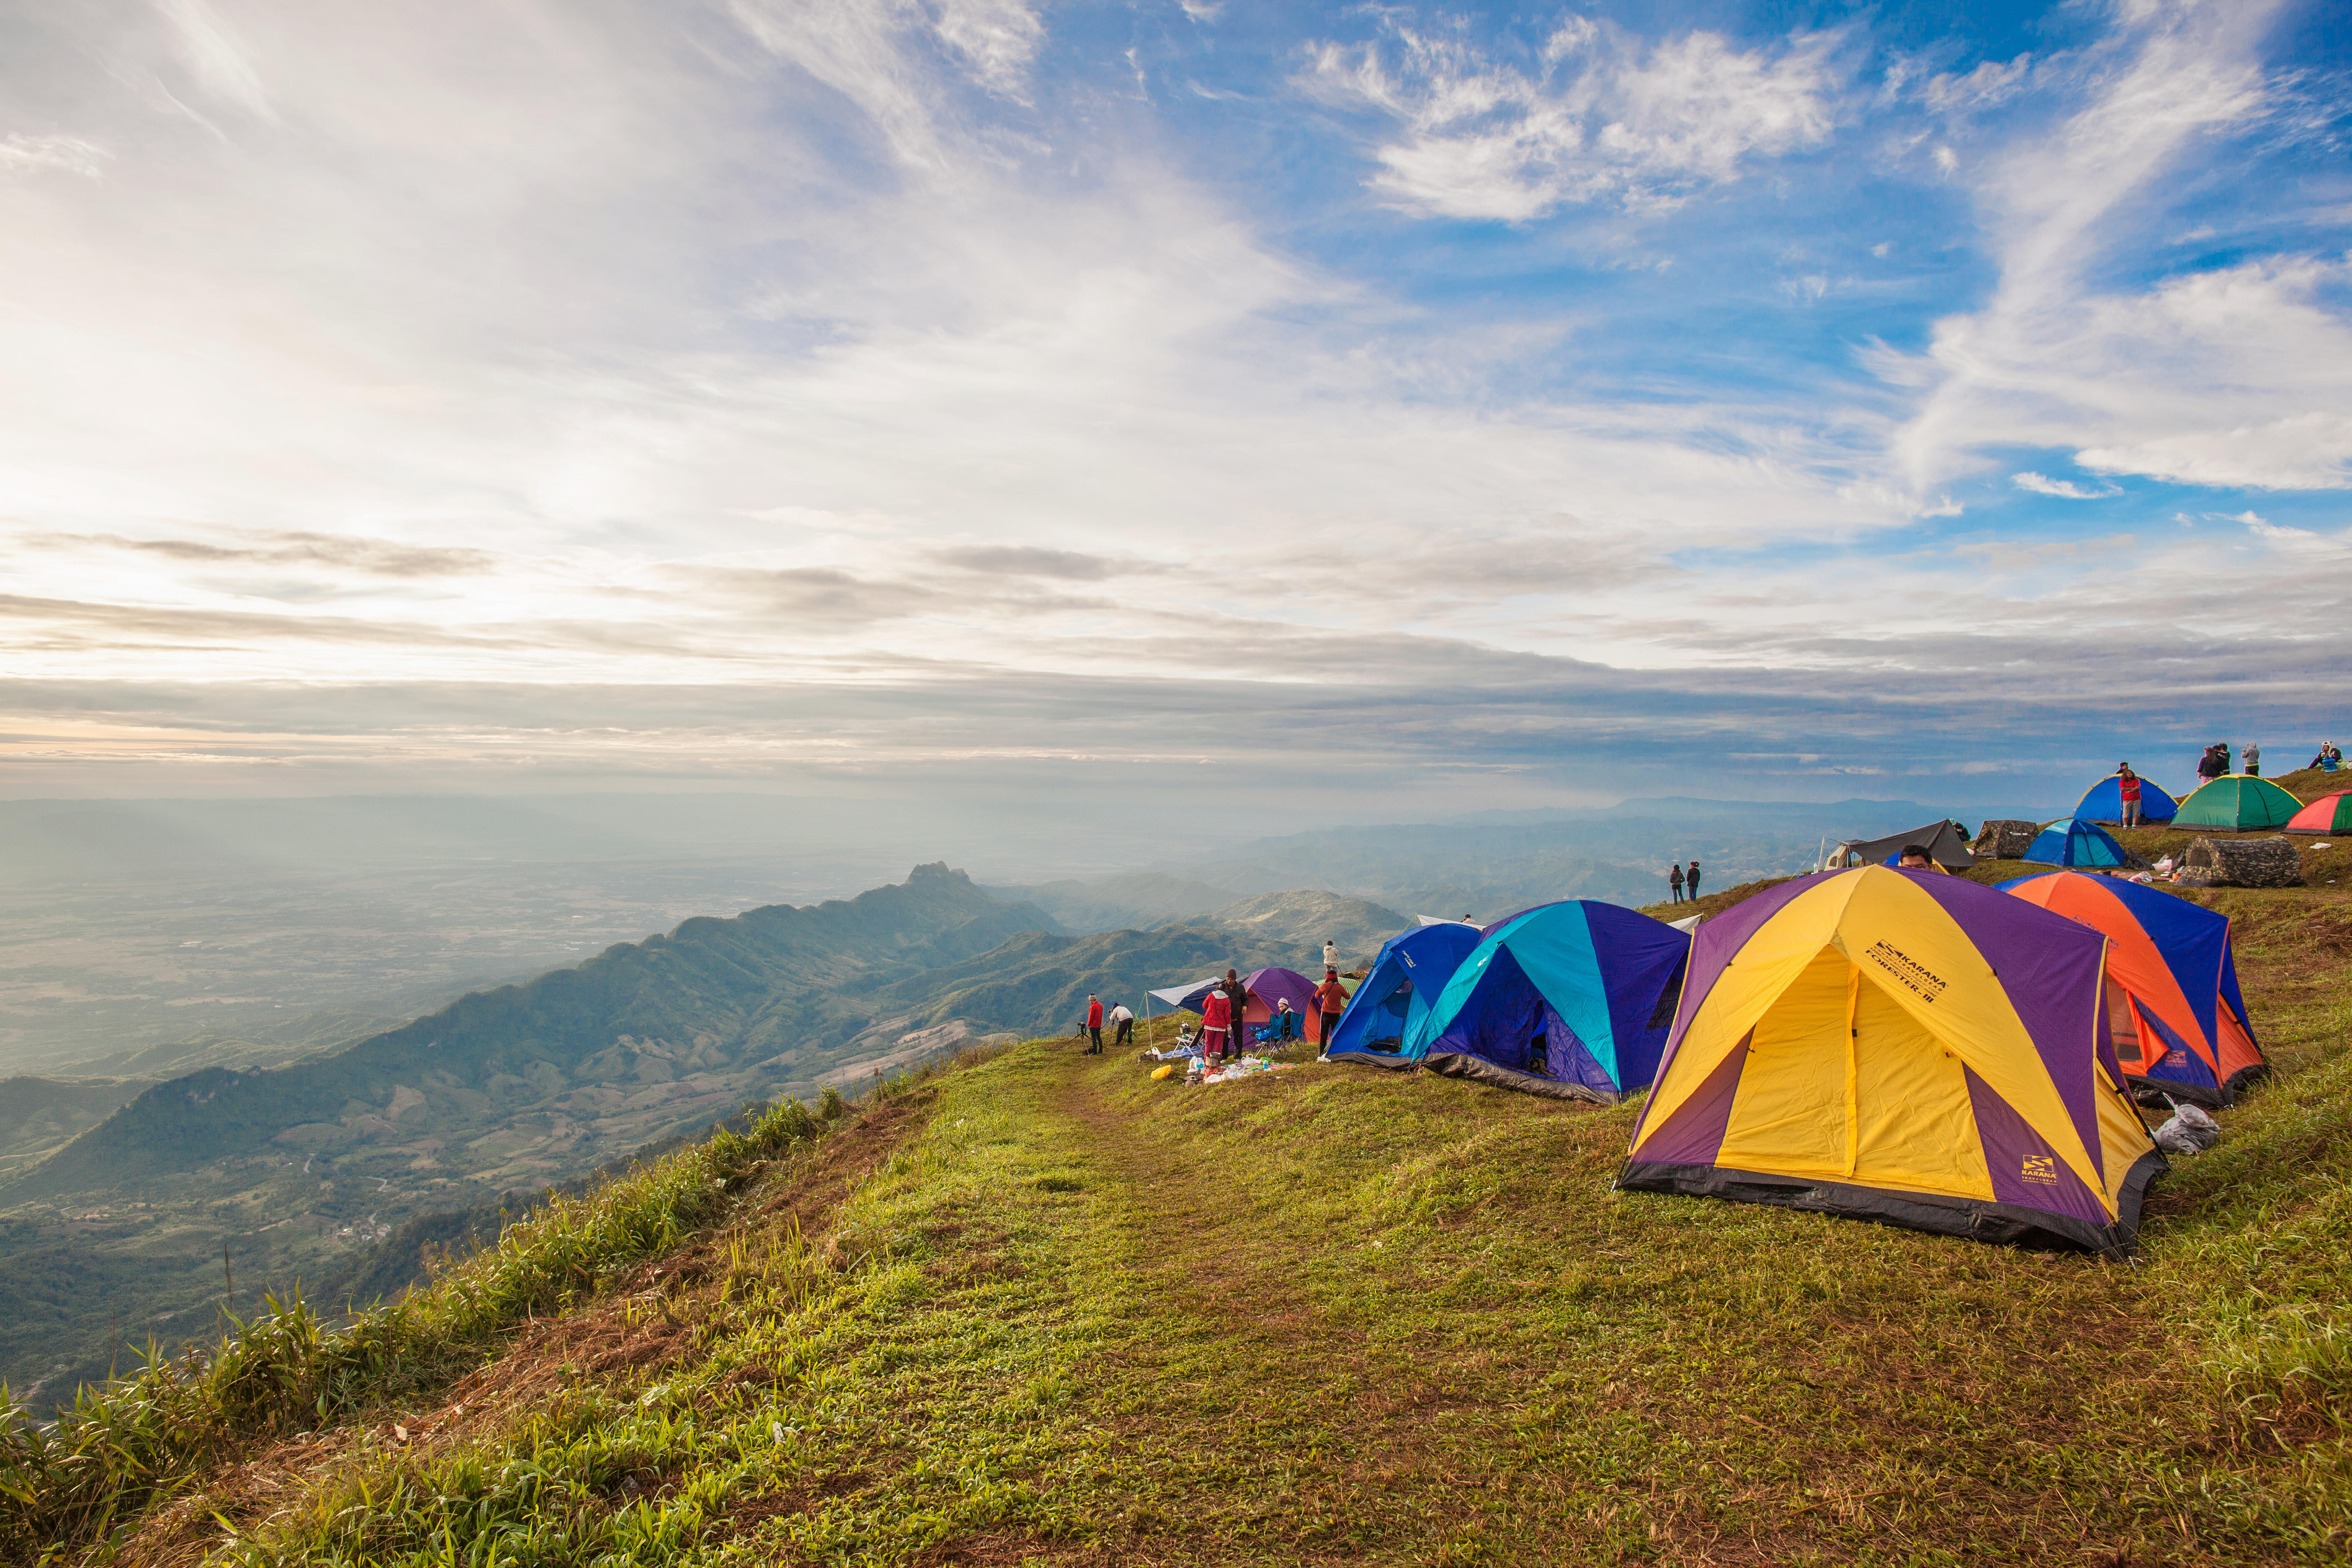 Top camping. Camp Valley палатки. Хиллтоп кемпинг. Гора Пху туб Берк. Camp Hill range.